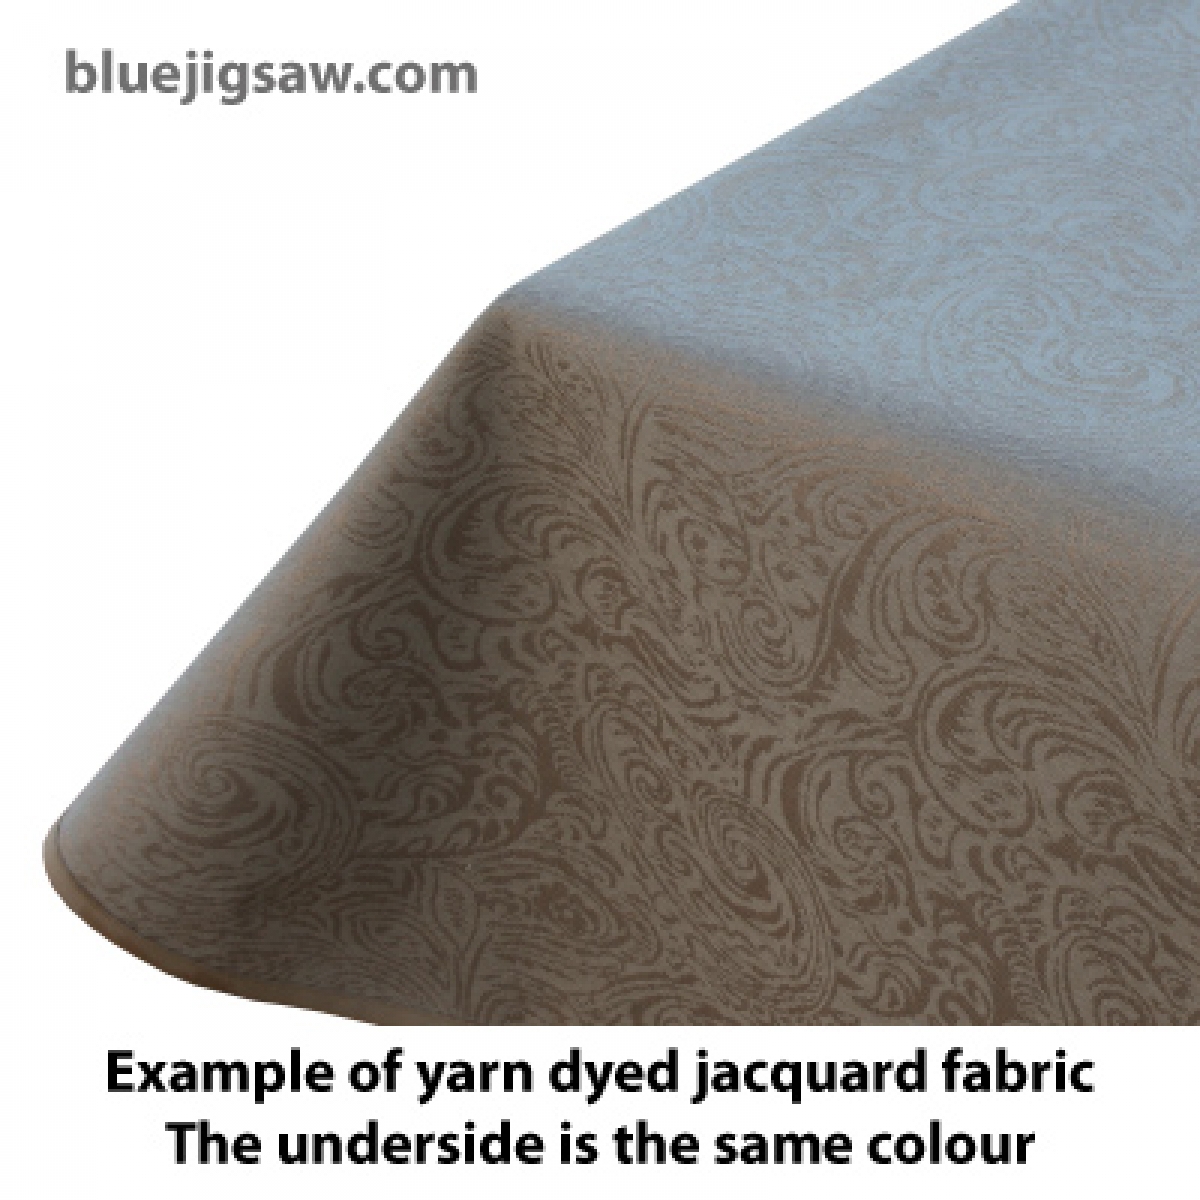 Acrylic Coated Tablecloths - Types